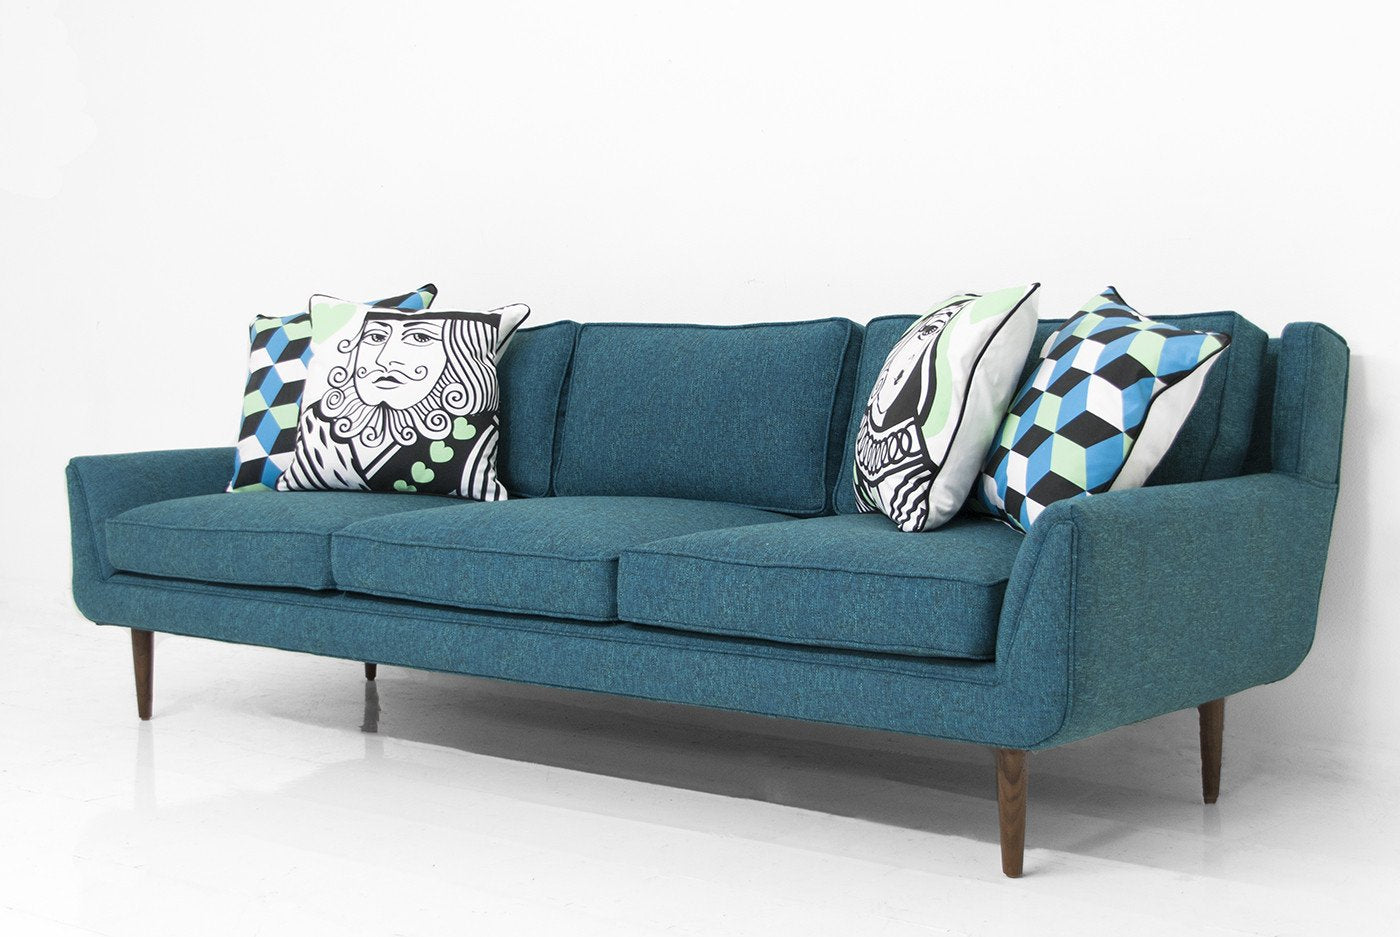 Stockholm Sofa in Notion Hypnotic Linen